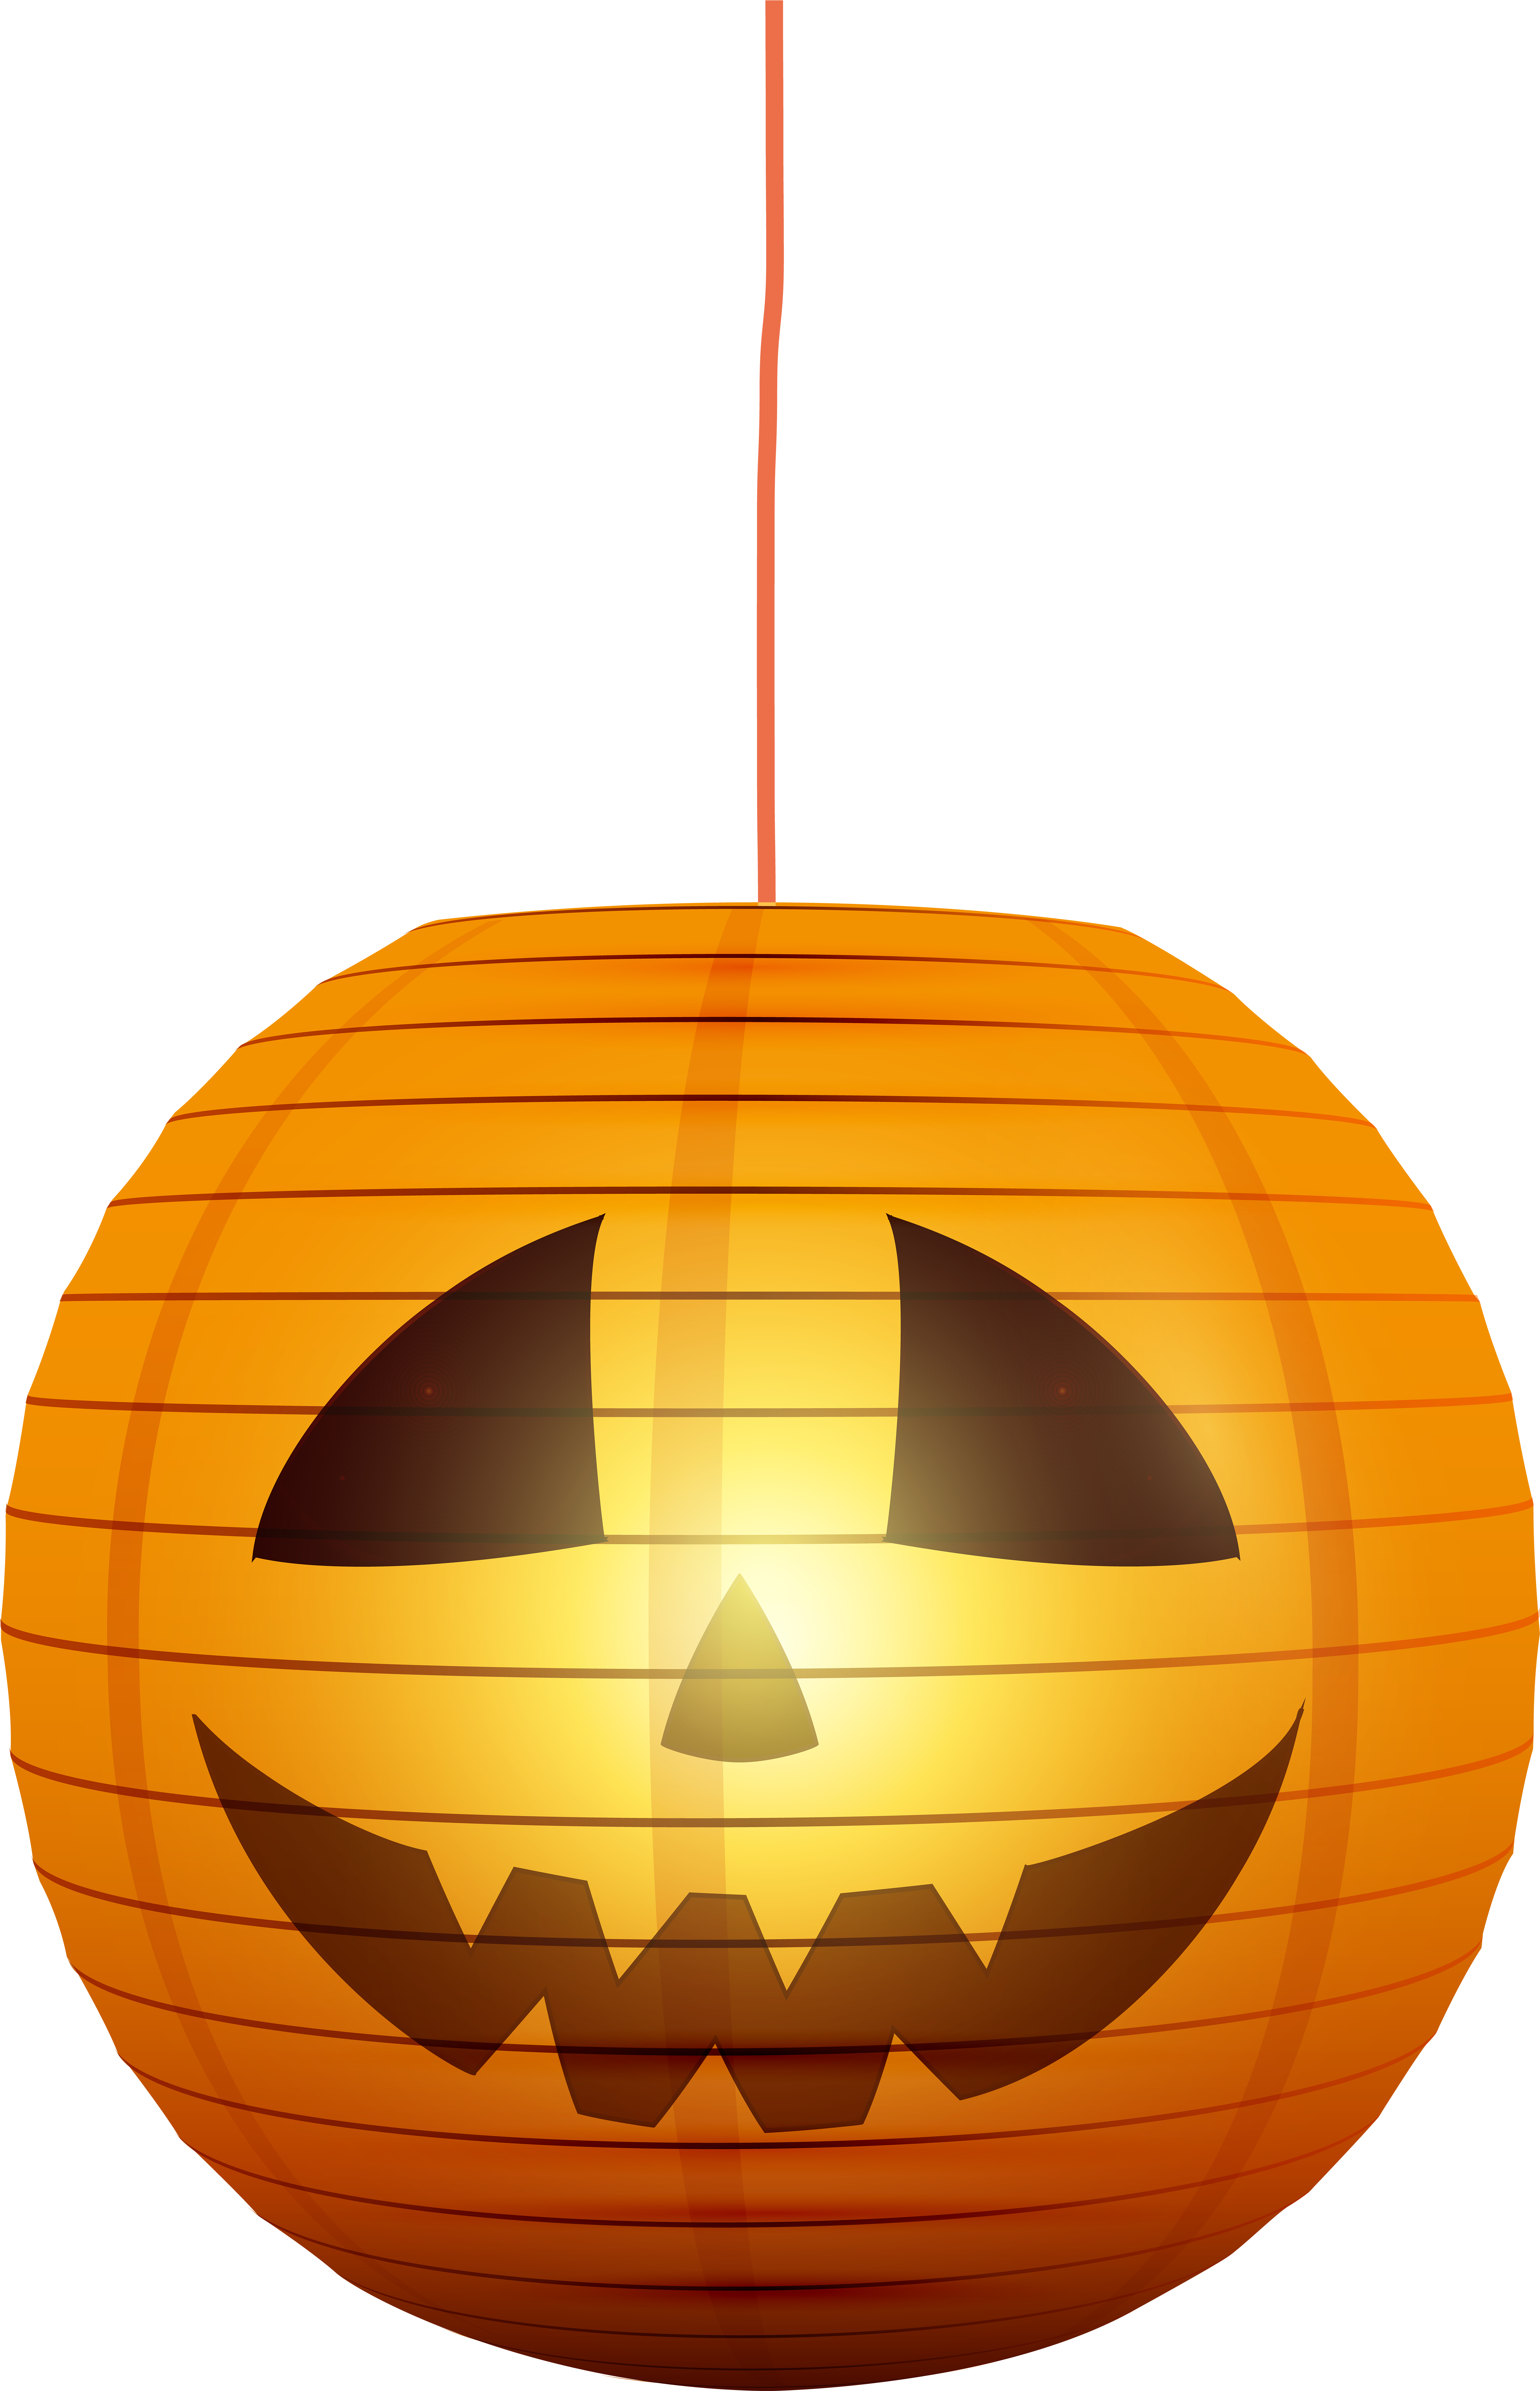 Halloween Pumpkin Png Transparent Clip Art Image 